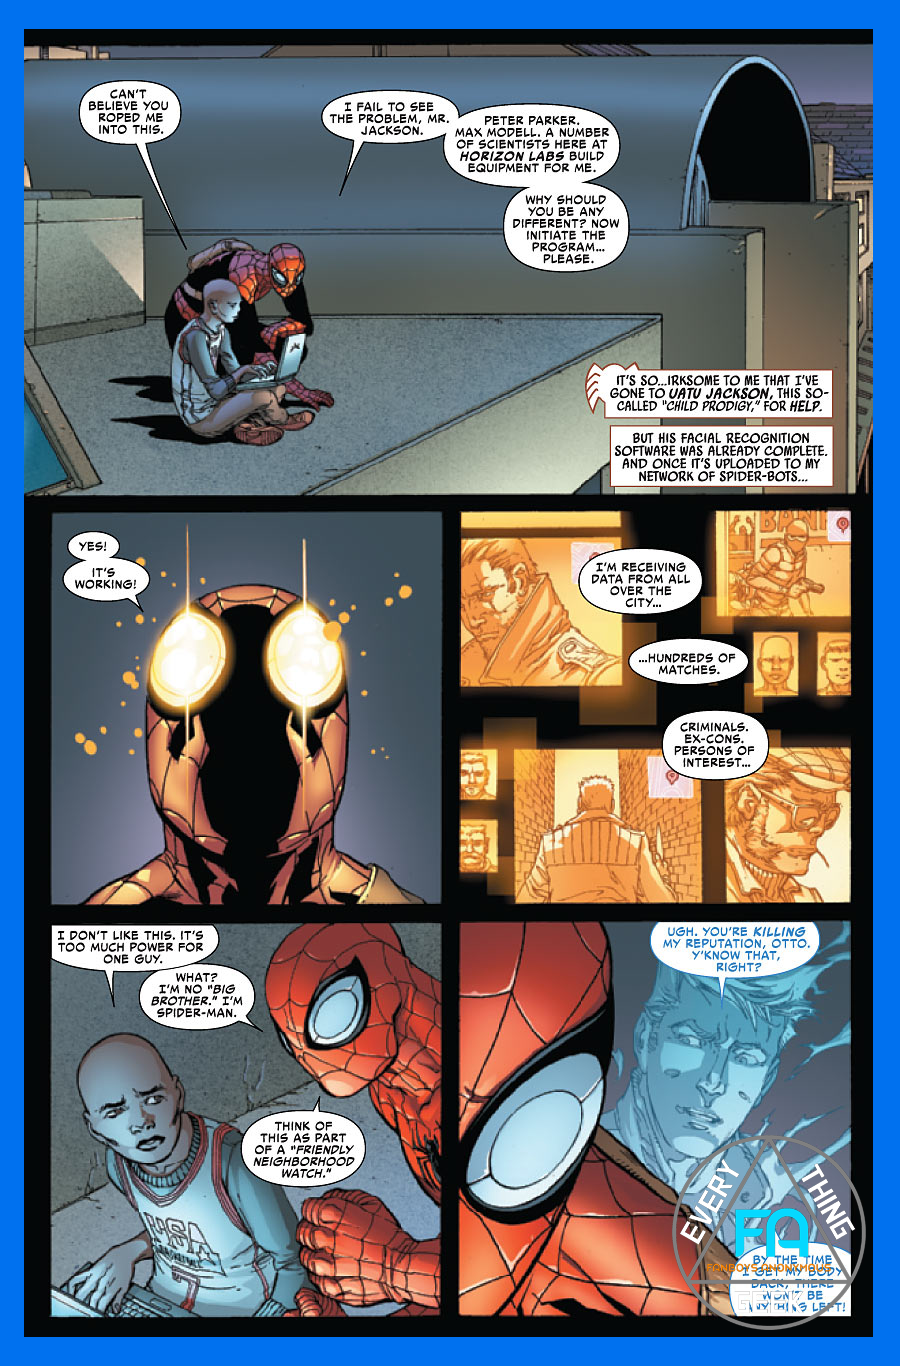 Superior Spider Man 1 Torrent Download